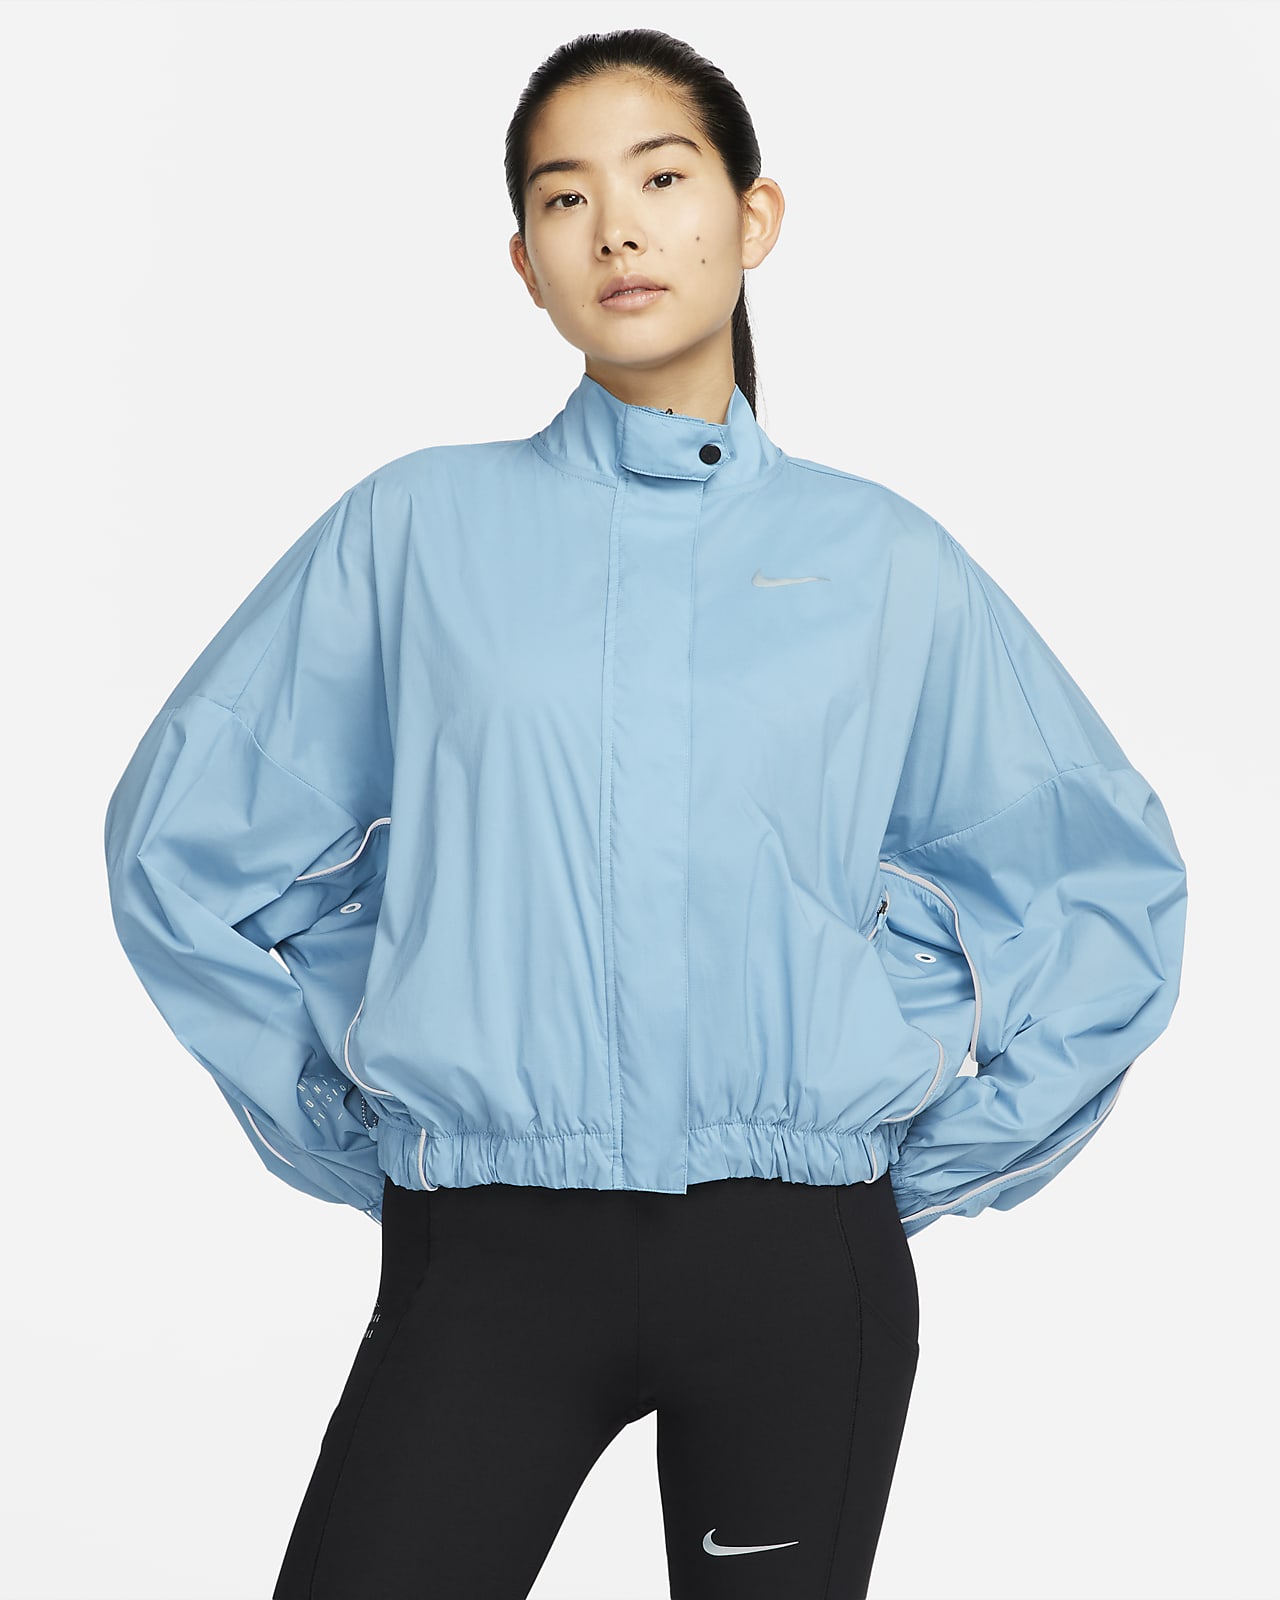 Nike Run Division Women's Jacket